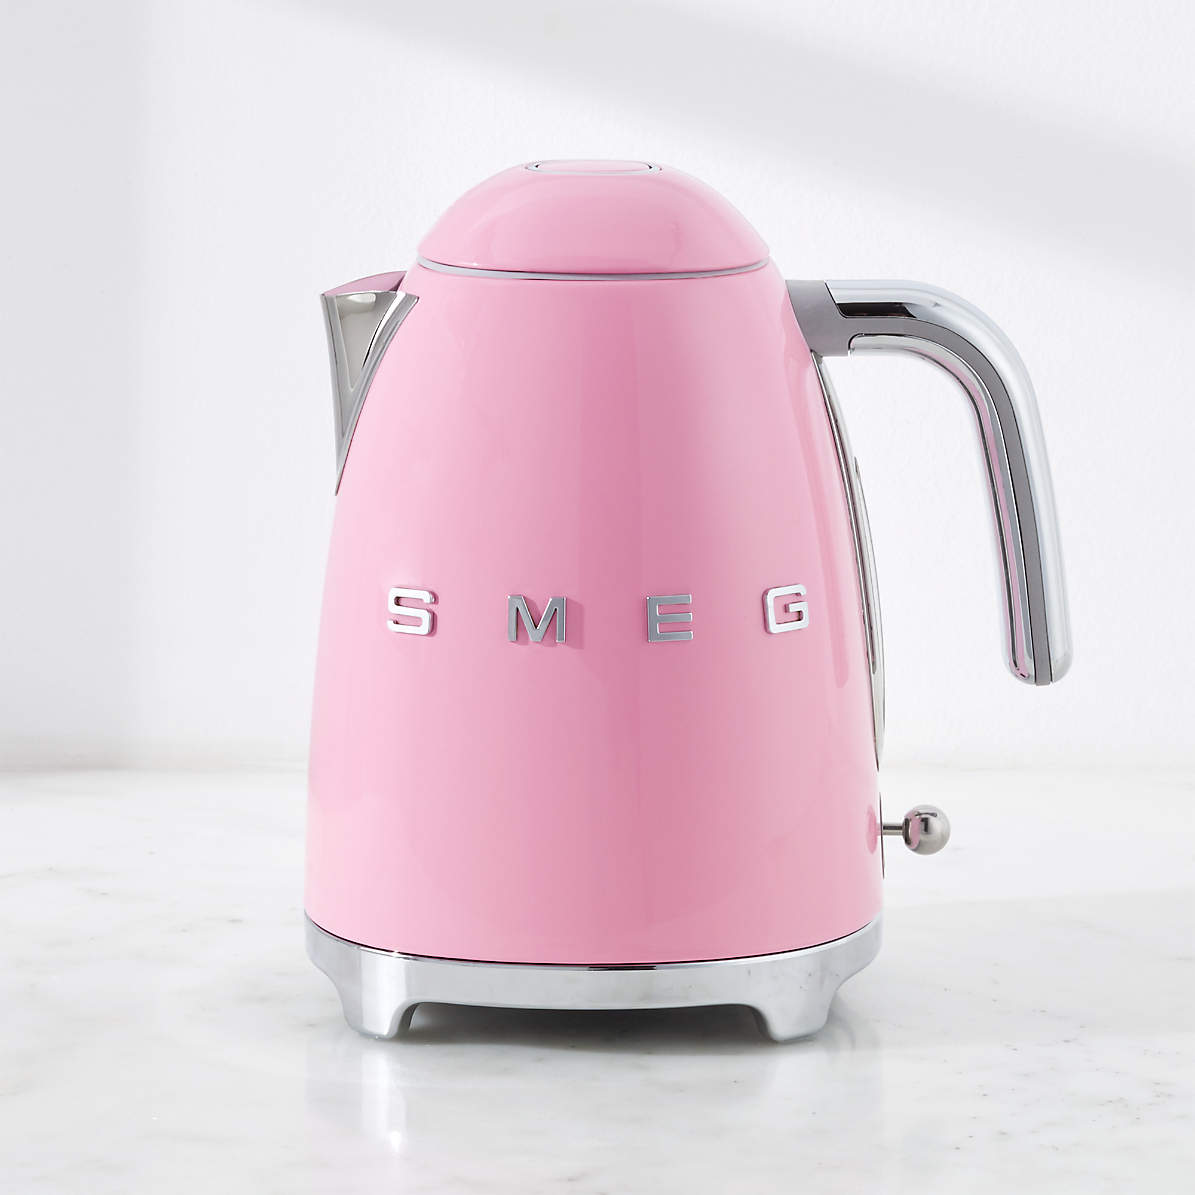 SMEG Pink Electric Kettle + Reviews 